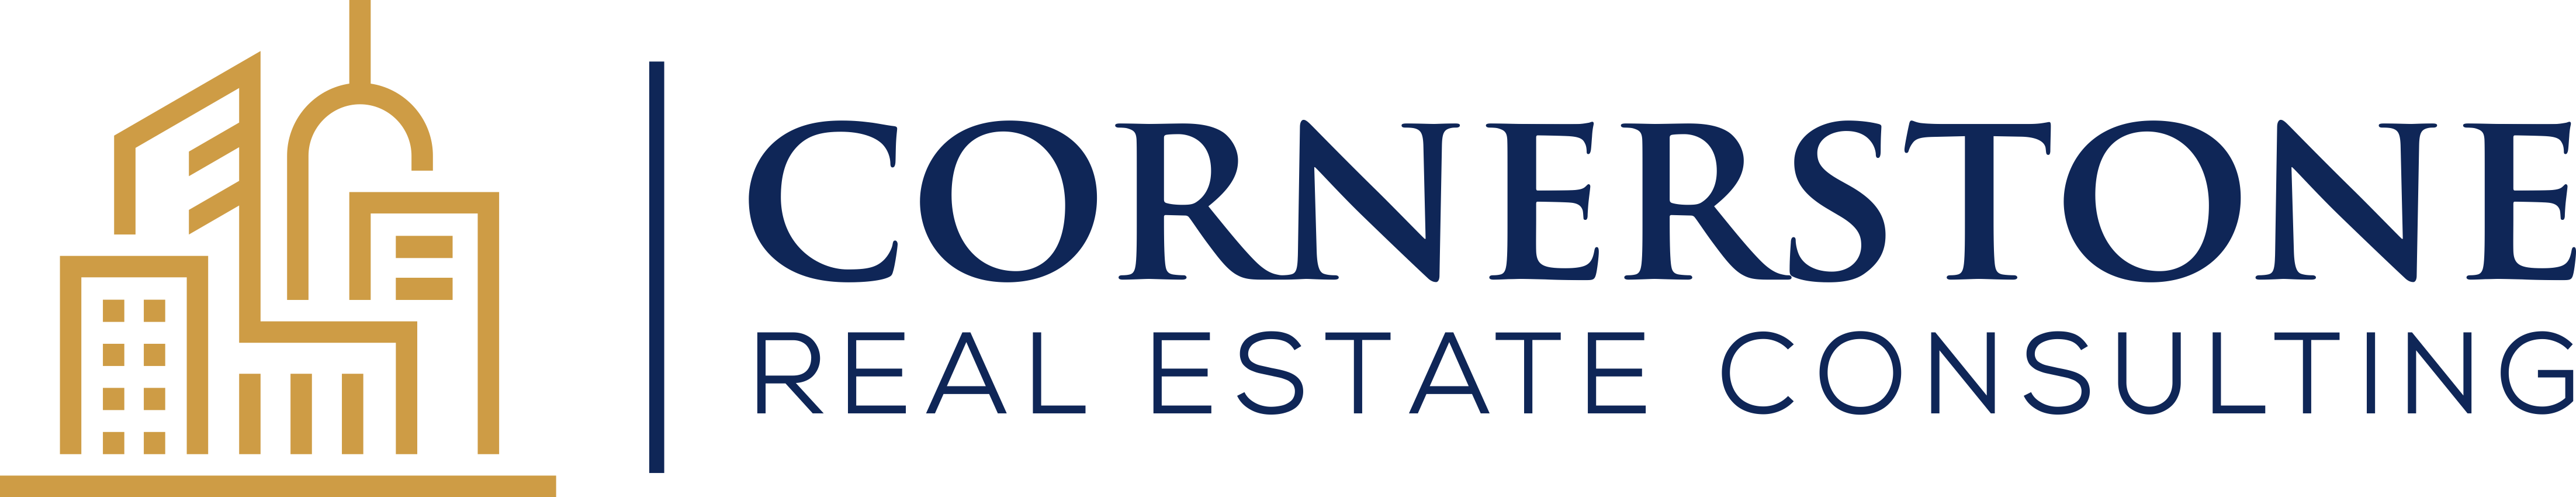 Cornerstone Real Estate Consulting Logo